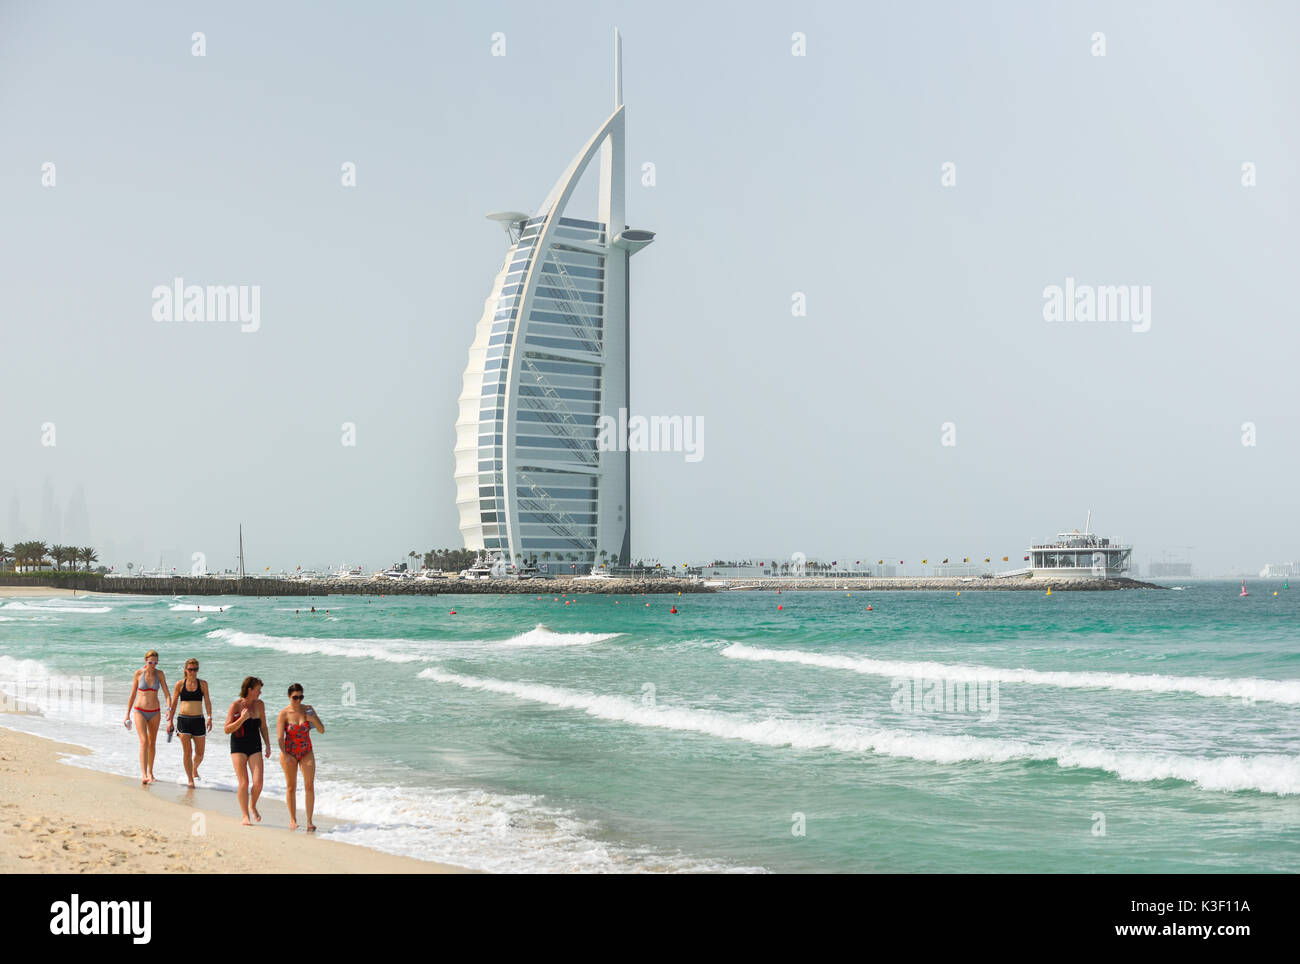 Dubai, United Arab Emirates - Oct 4, 2016: The Burj Al Arab note and Jumeira beach at morning, view from Jumeira beach. Stock Photo